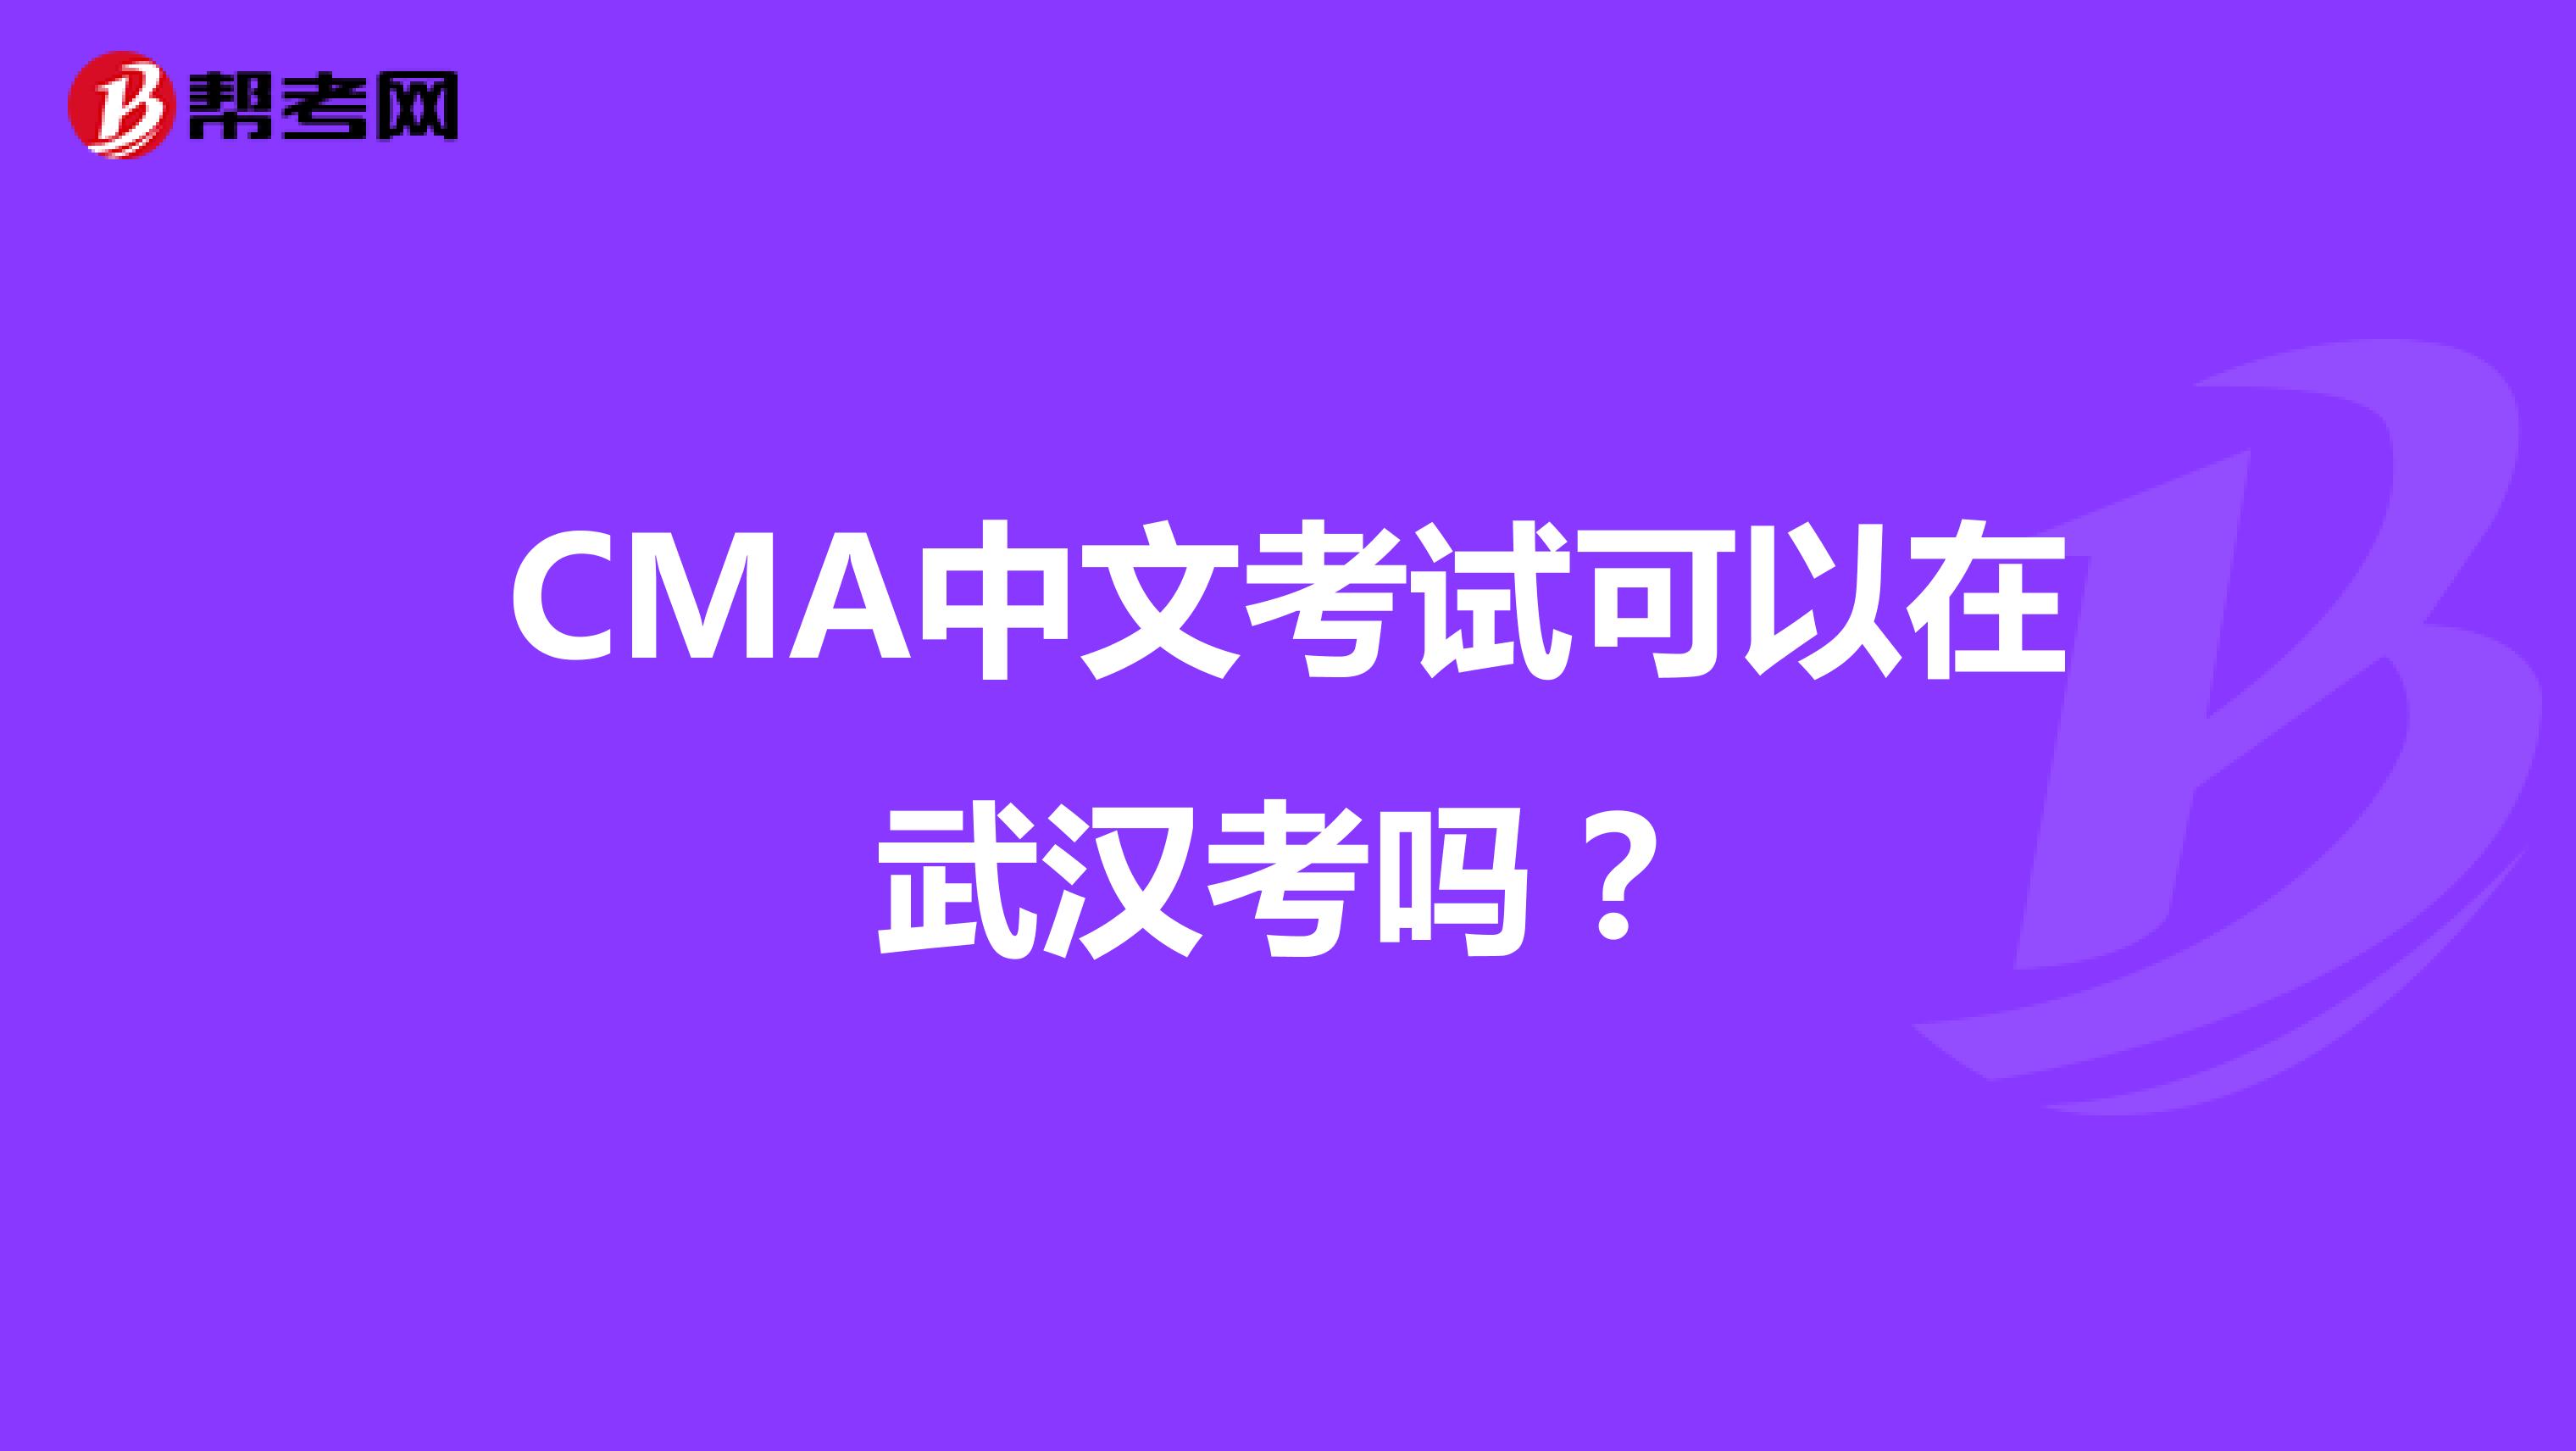 CMA中文考试可以在武汉考吗？